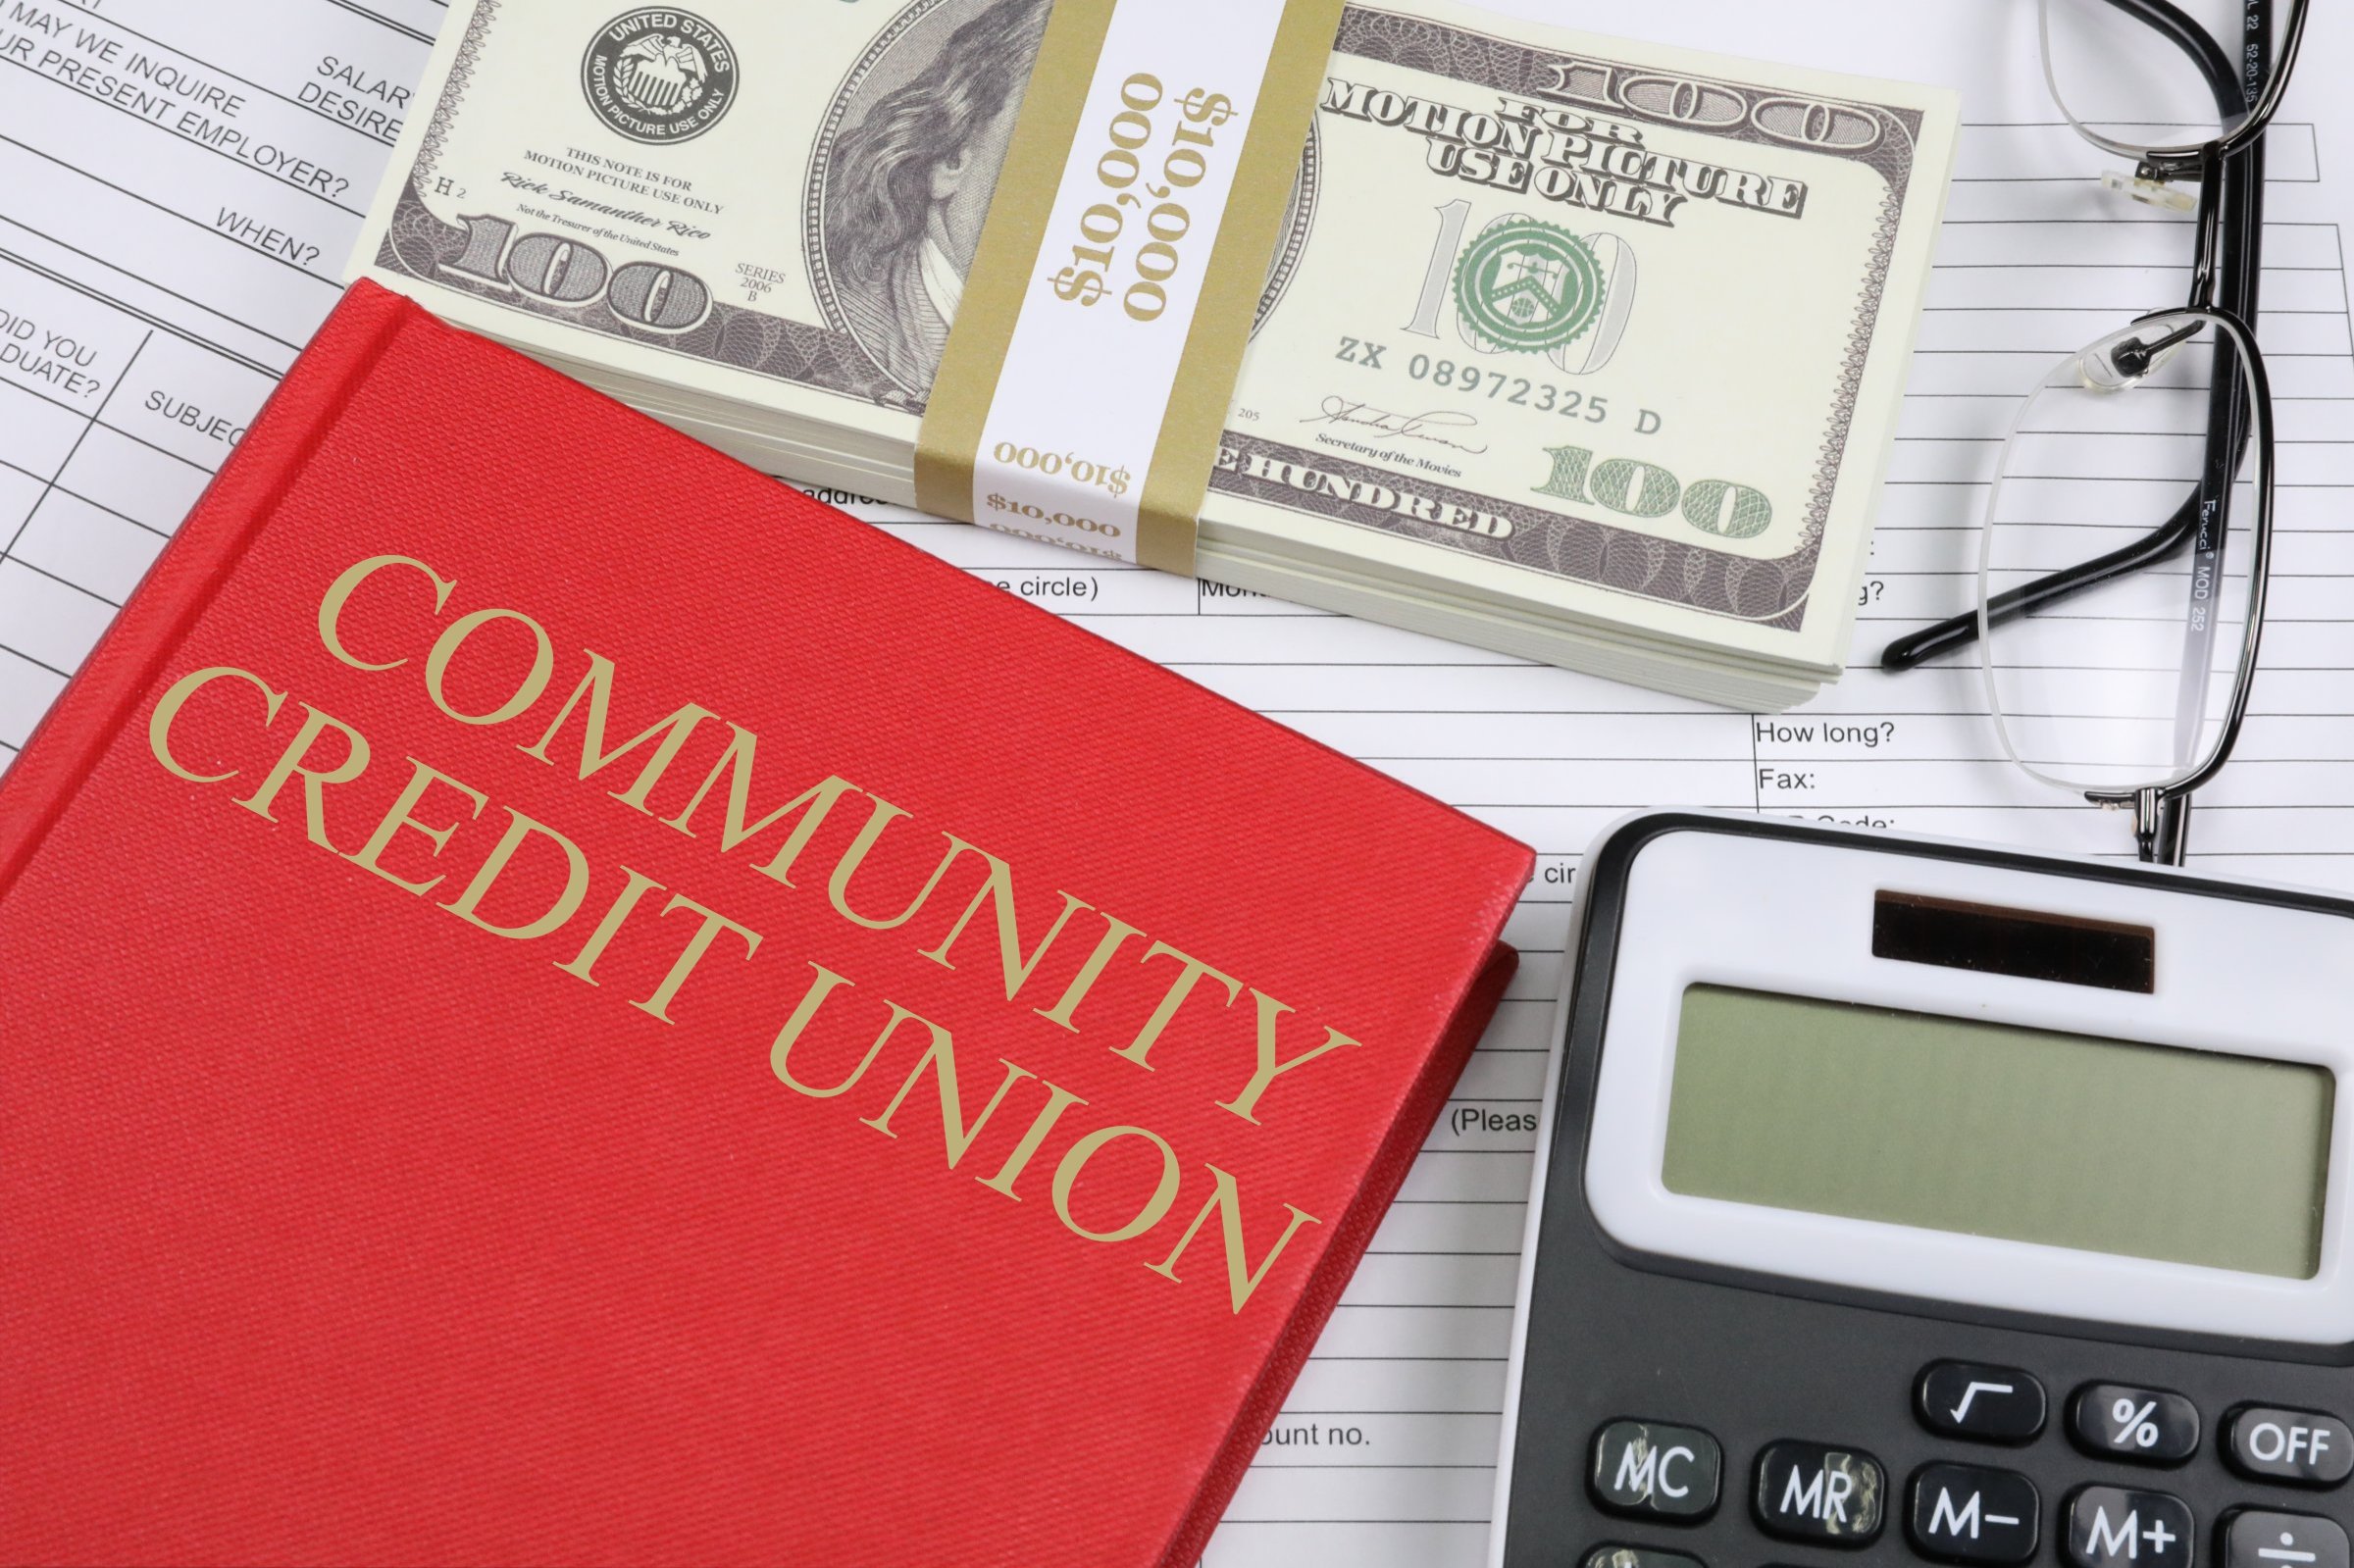 community credit union